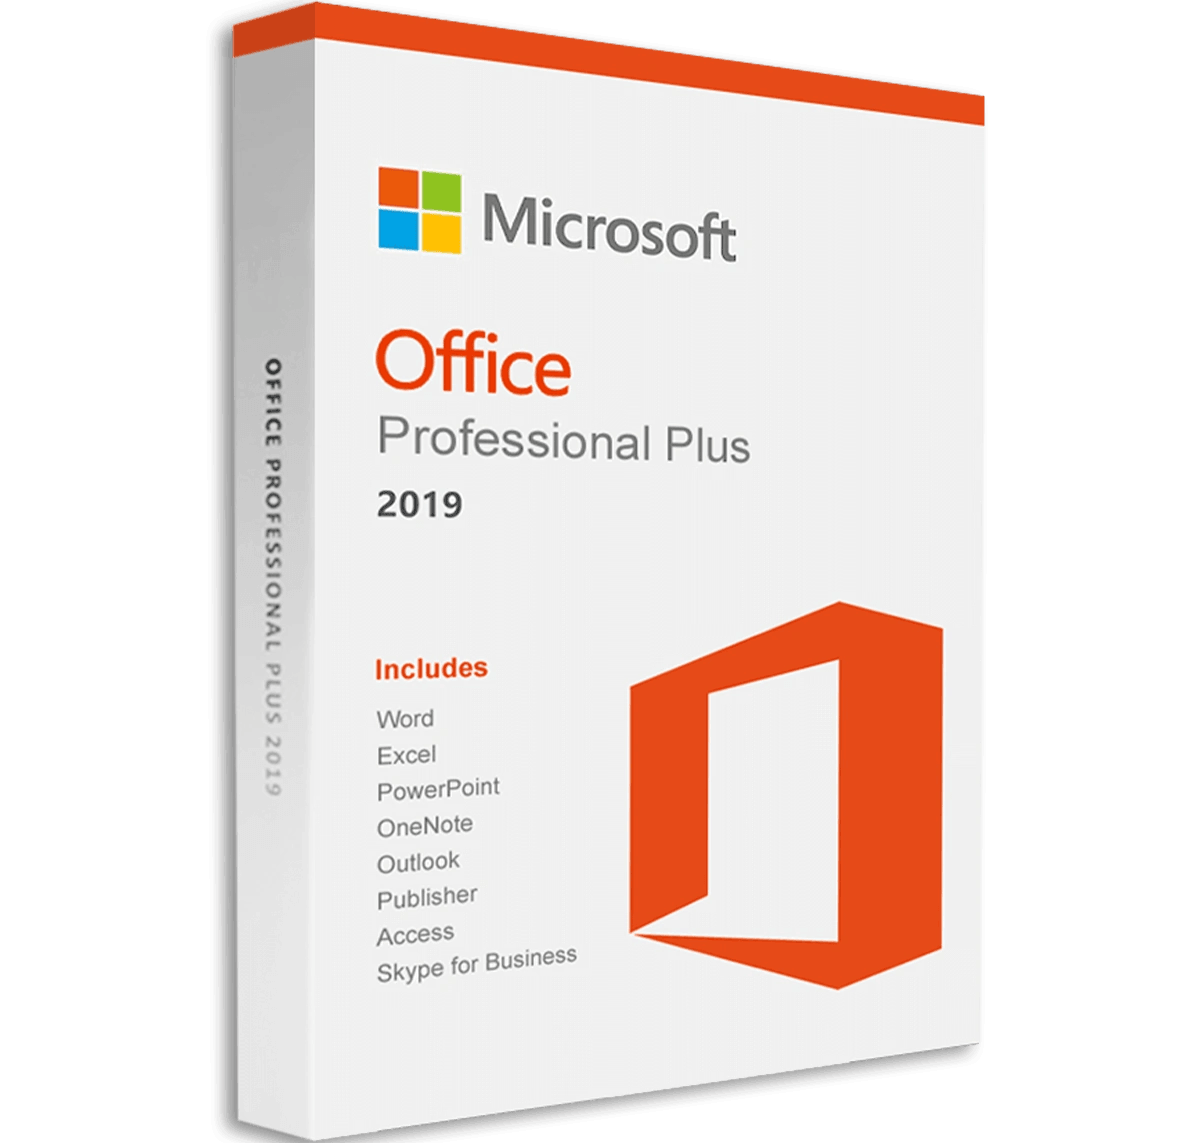 Microsoft Office 2019 Professional Plus - validvalley.com - Chave do produto, Chiave del prodotto, Clave del producto, Product Key, Produktschlüssel, Ürün Anahtarı